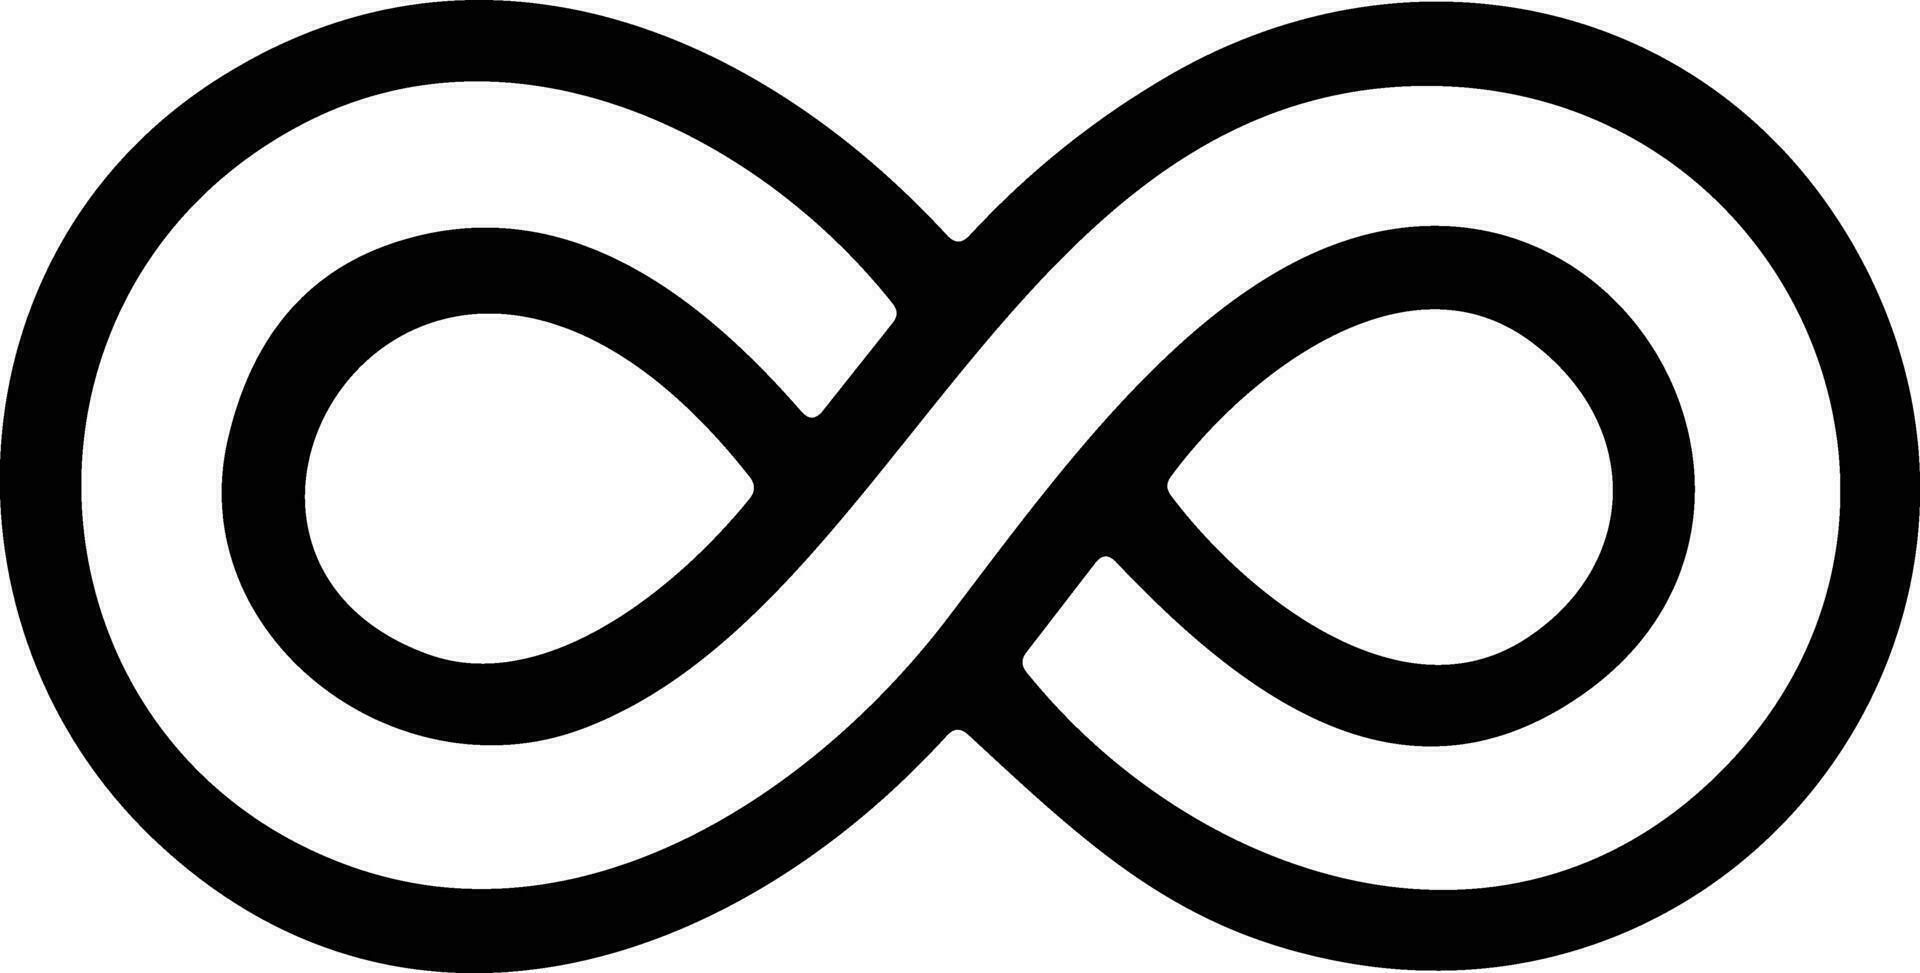 infinito icono. infinidad, eternidad, infinito, sin fin, lazo simbolos ilimitado infinito icono plano estilo valores vector